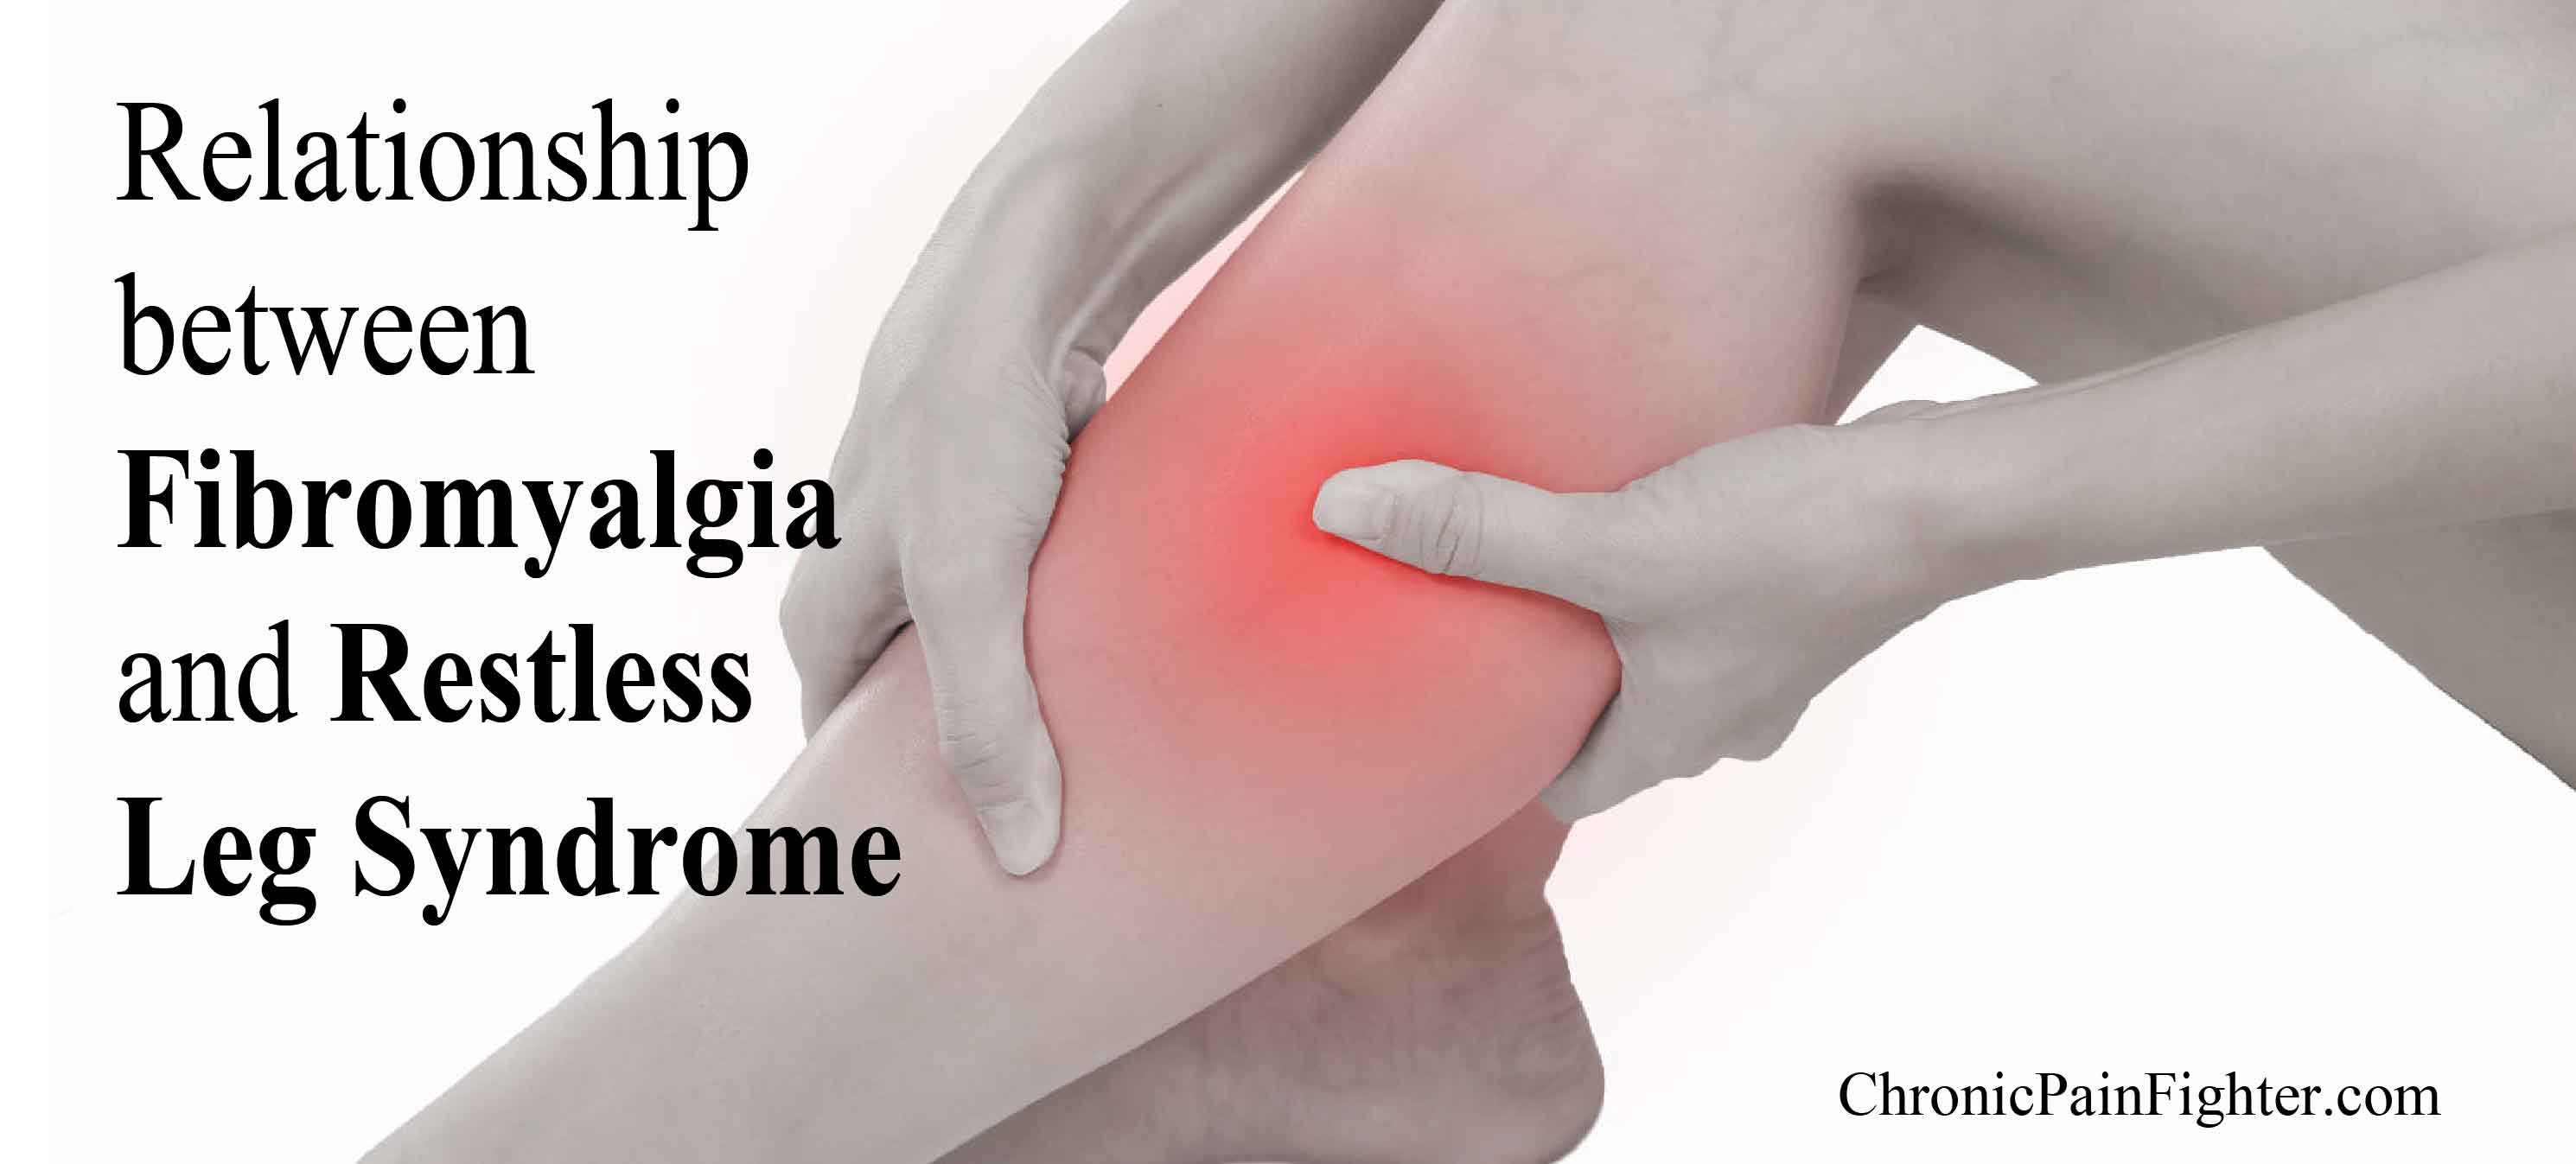 Relationship between Fibromyalgia and Restless Leg Syndrome